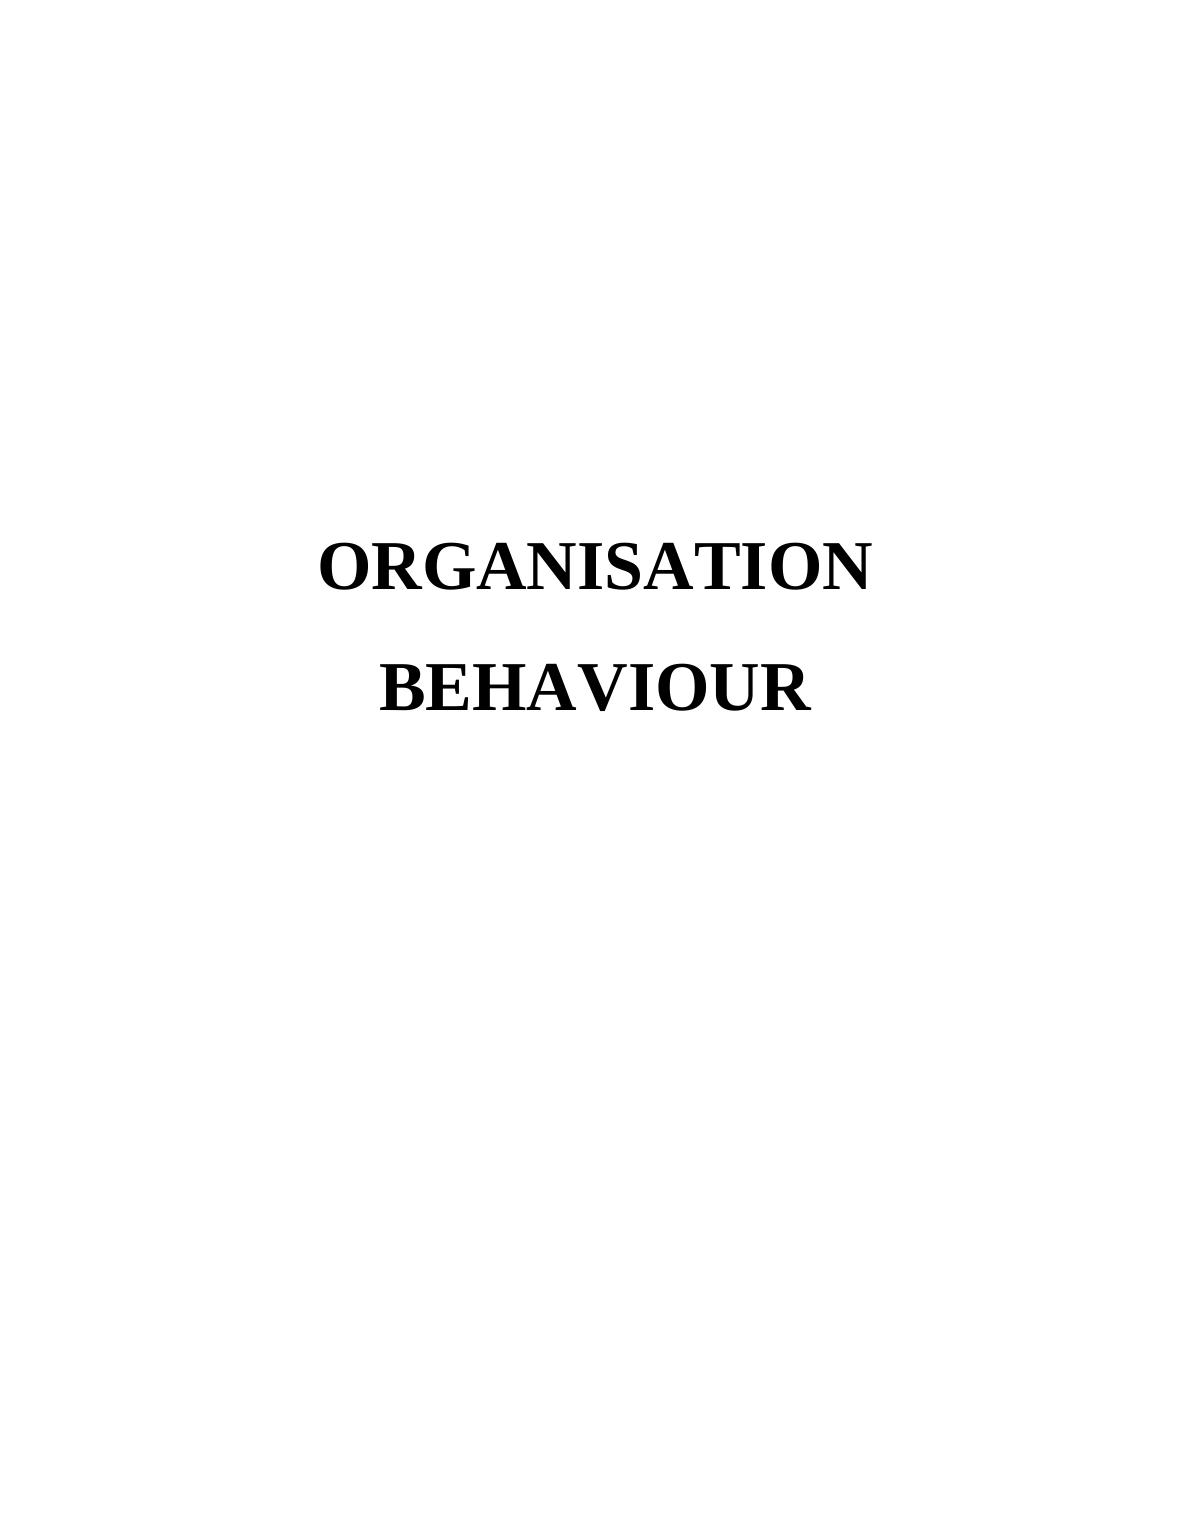 Organisation Behaviour Assignment Doc_1